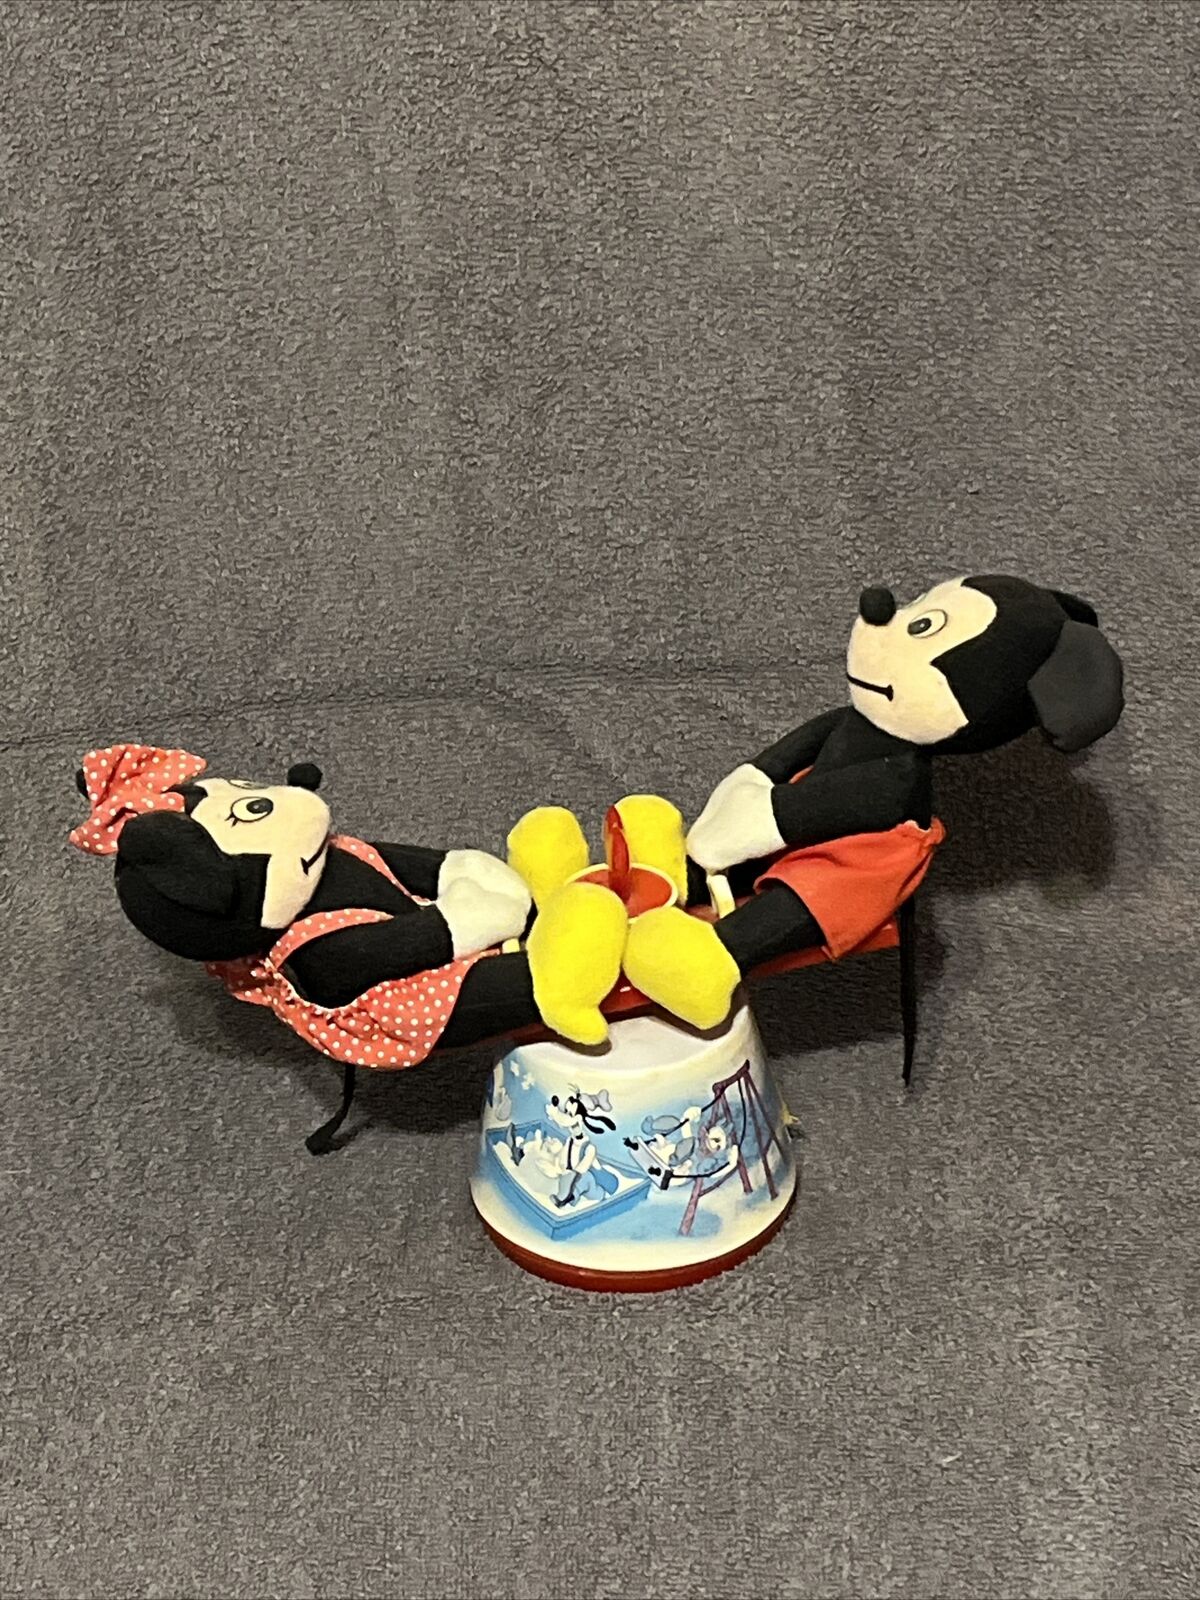 Vintage Mickey & Minnie Musical Teeter Totter Seesaw Disney Music Box - Works